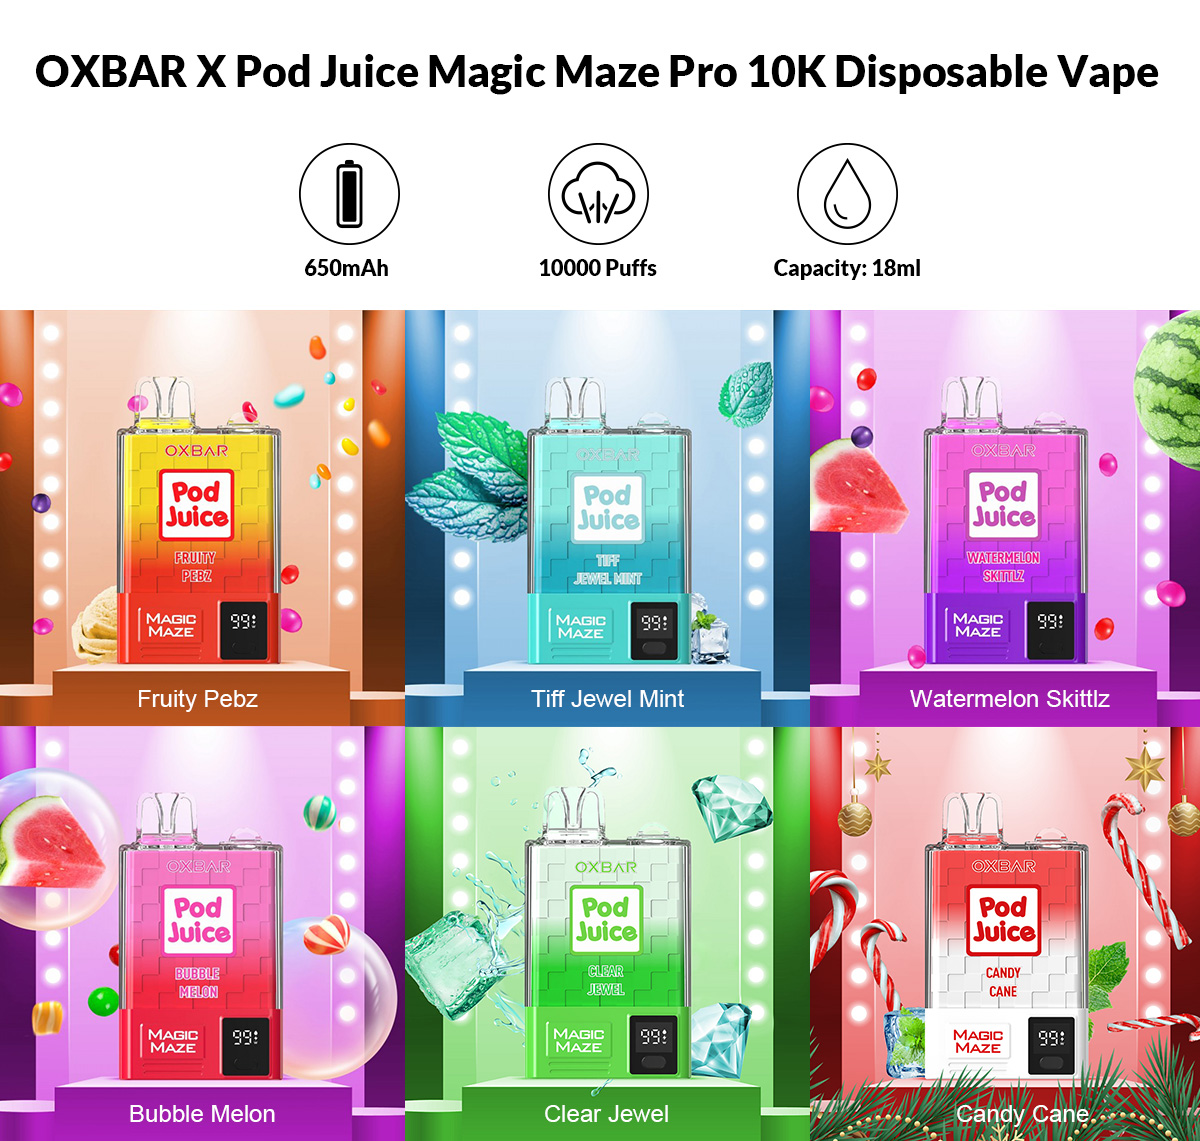 OXBAR X Pod Juice Magic Maze Pro 10K hot sale